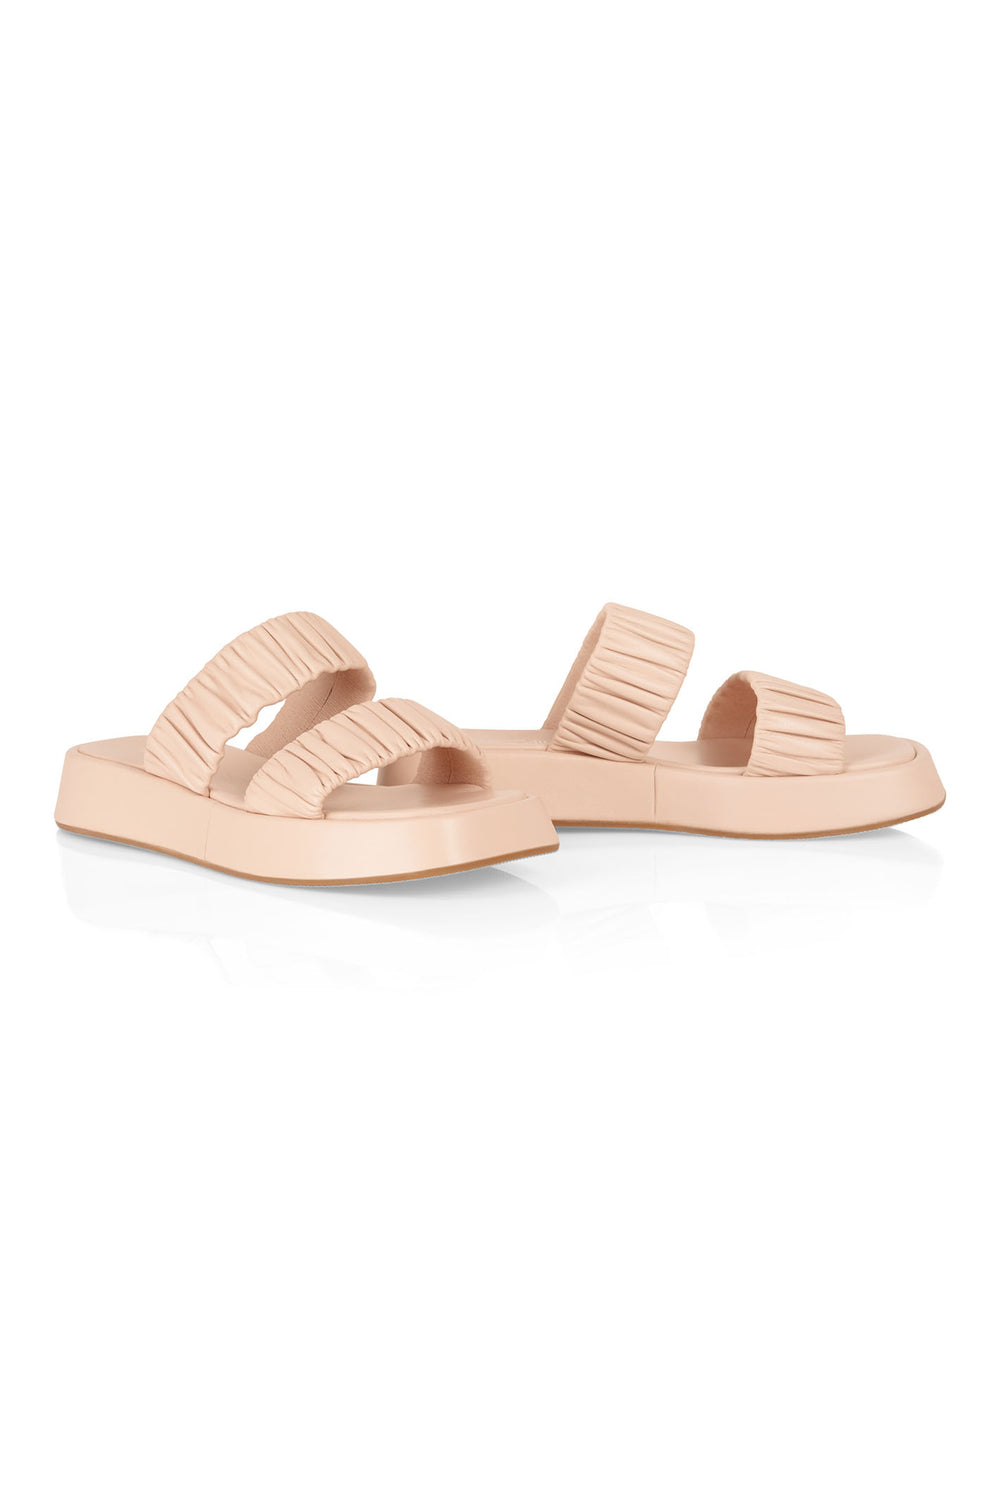 Marc Cain WB SQ.02 L19 203 Soft Rose Pink Slider Sandals - Olivia Grace Fashion